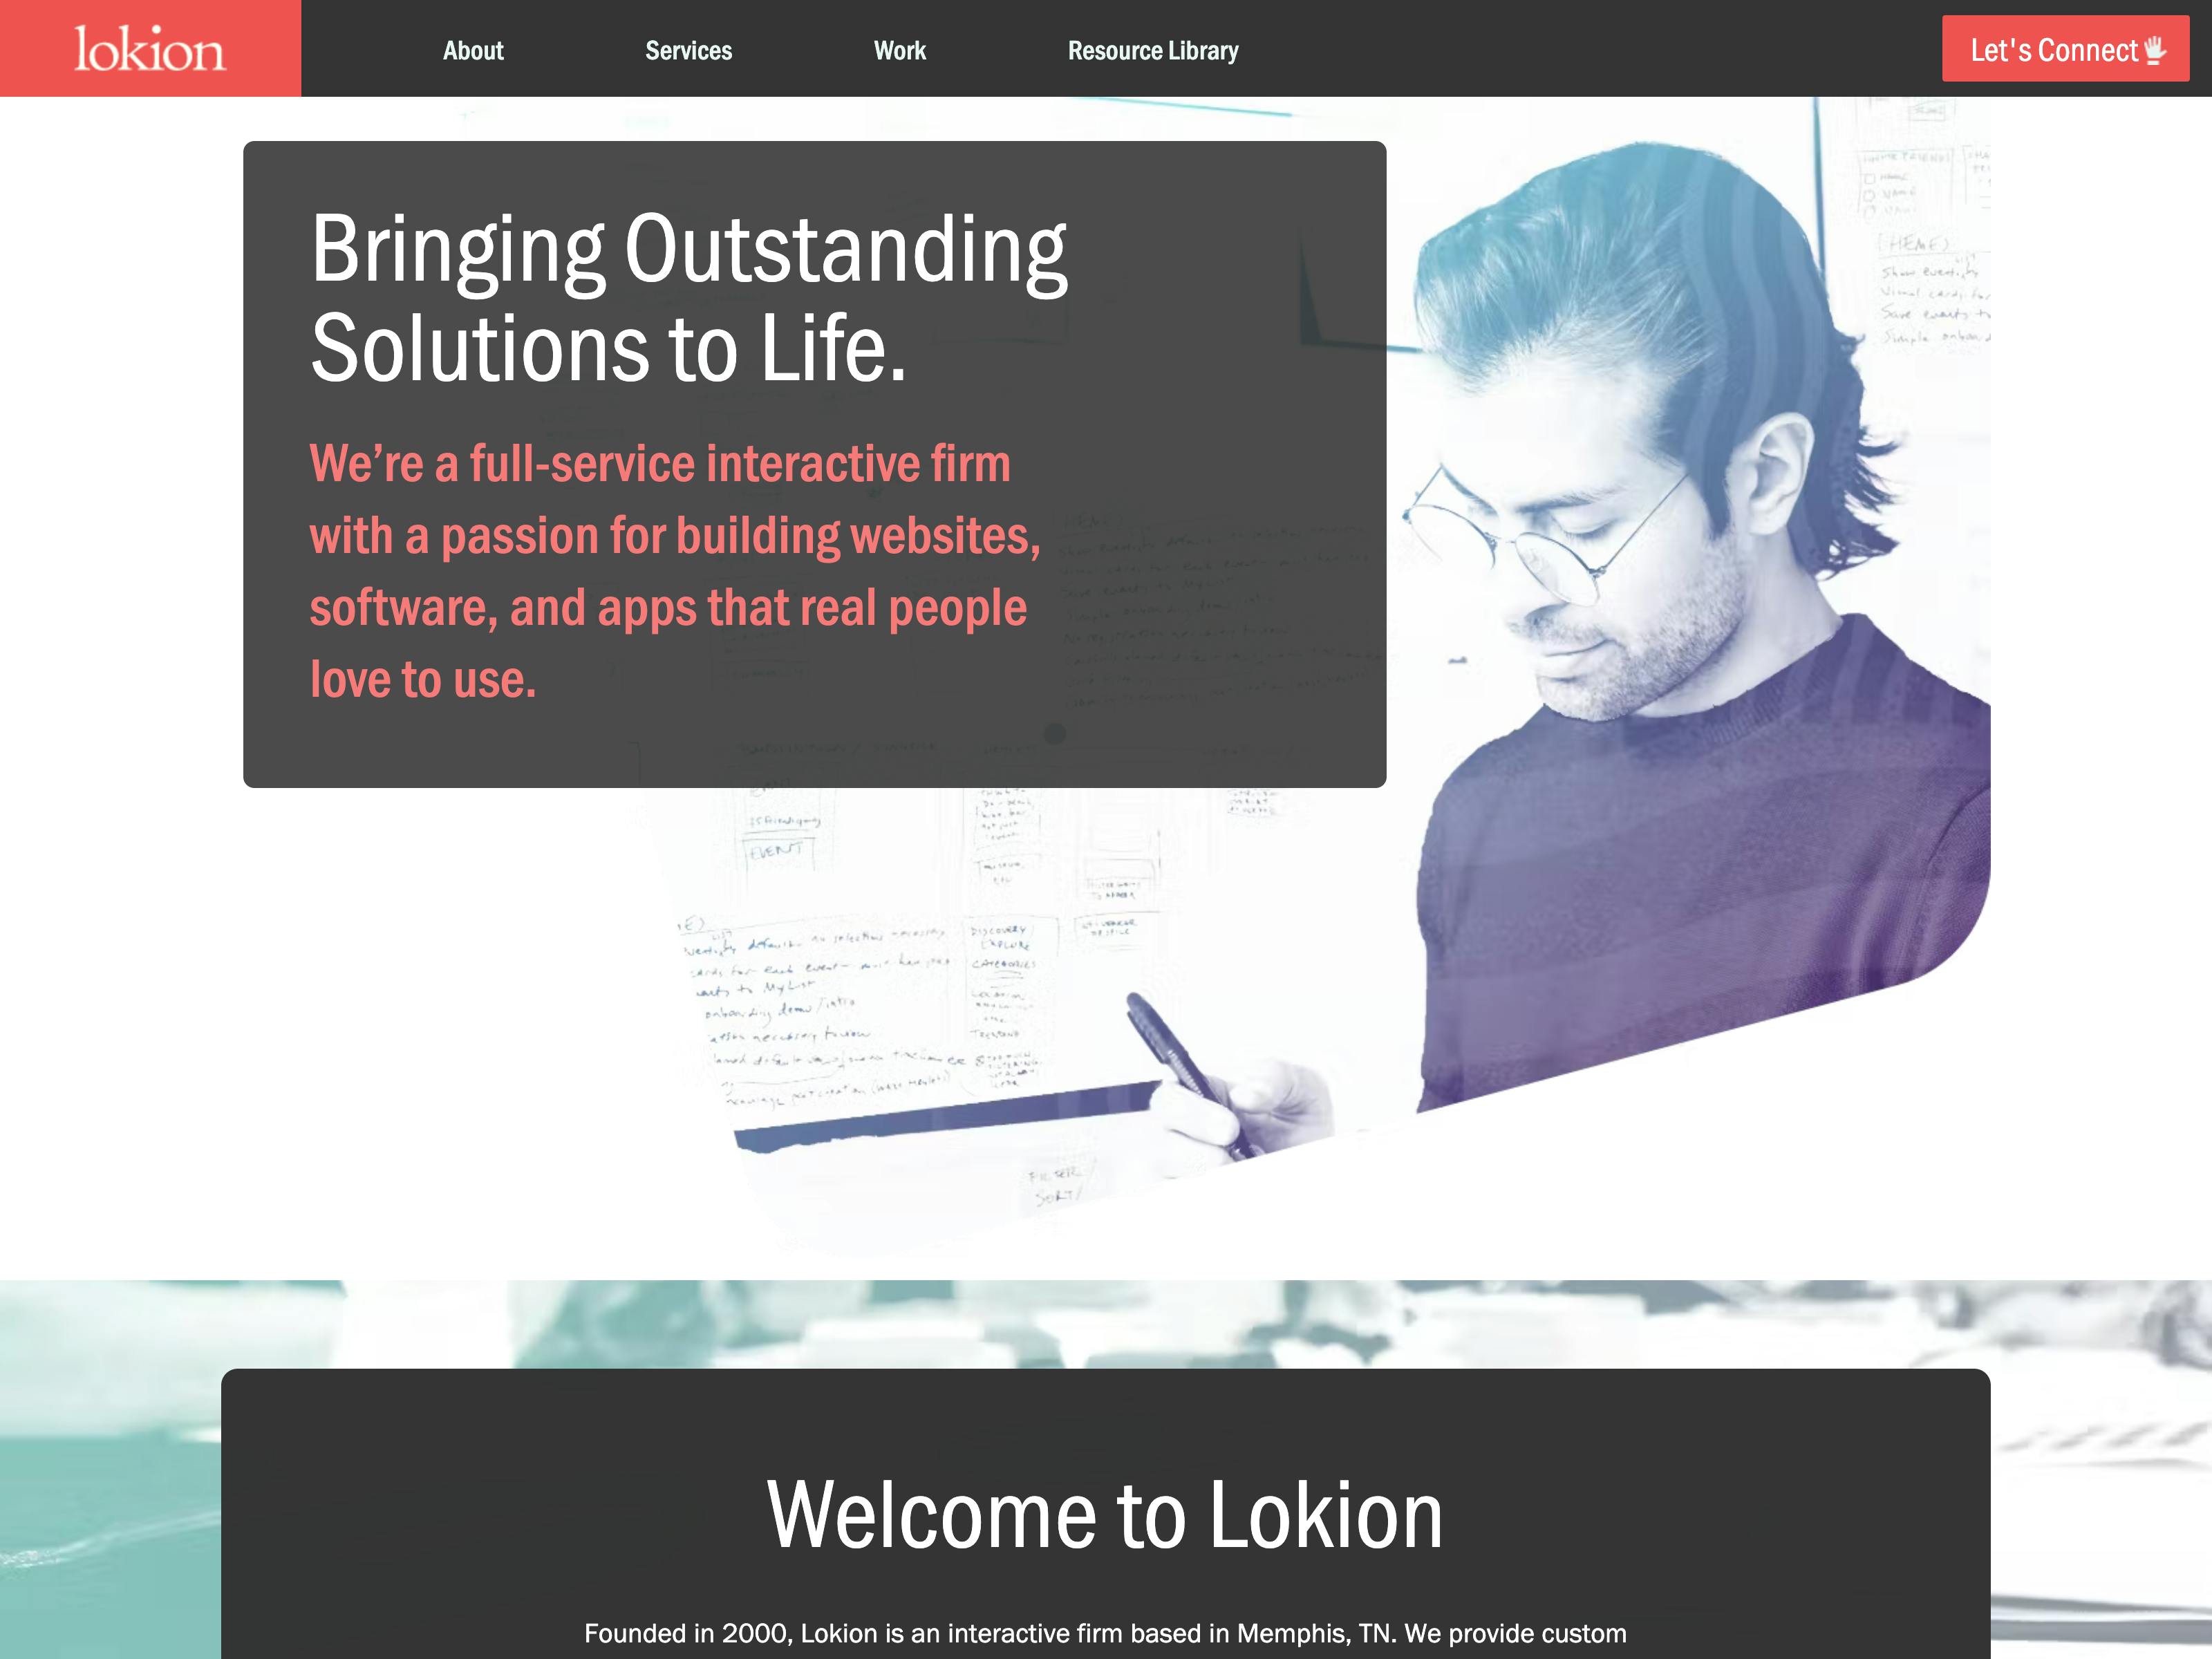 Lokion website screenshot